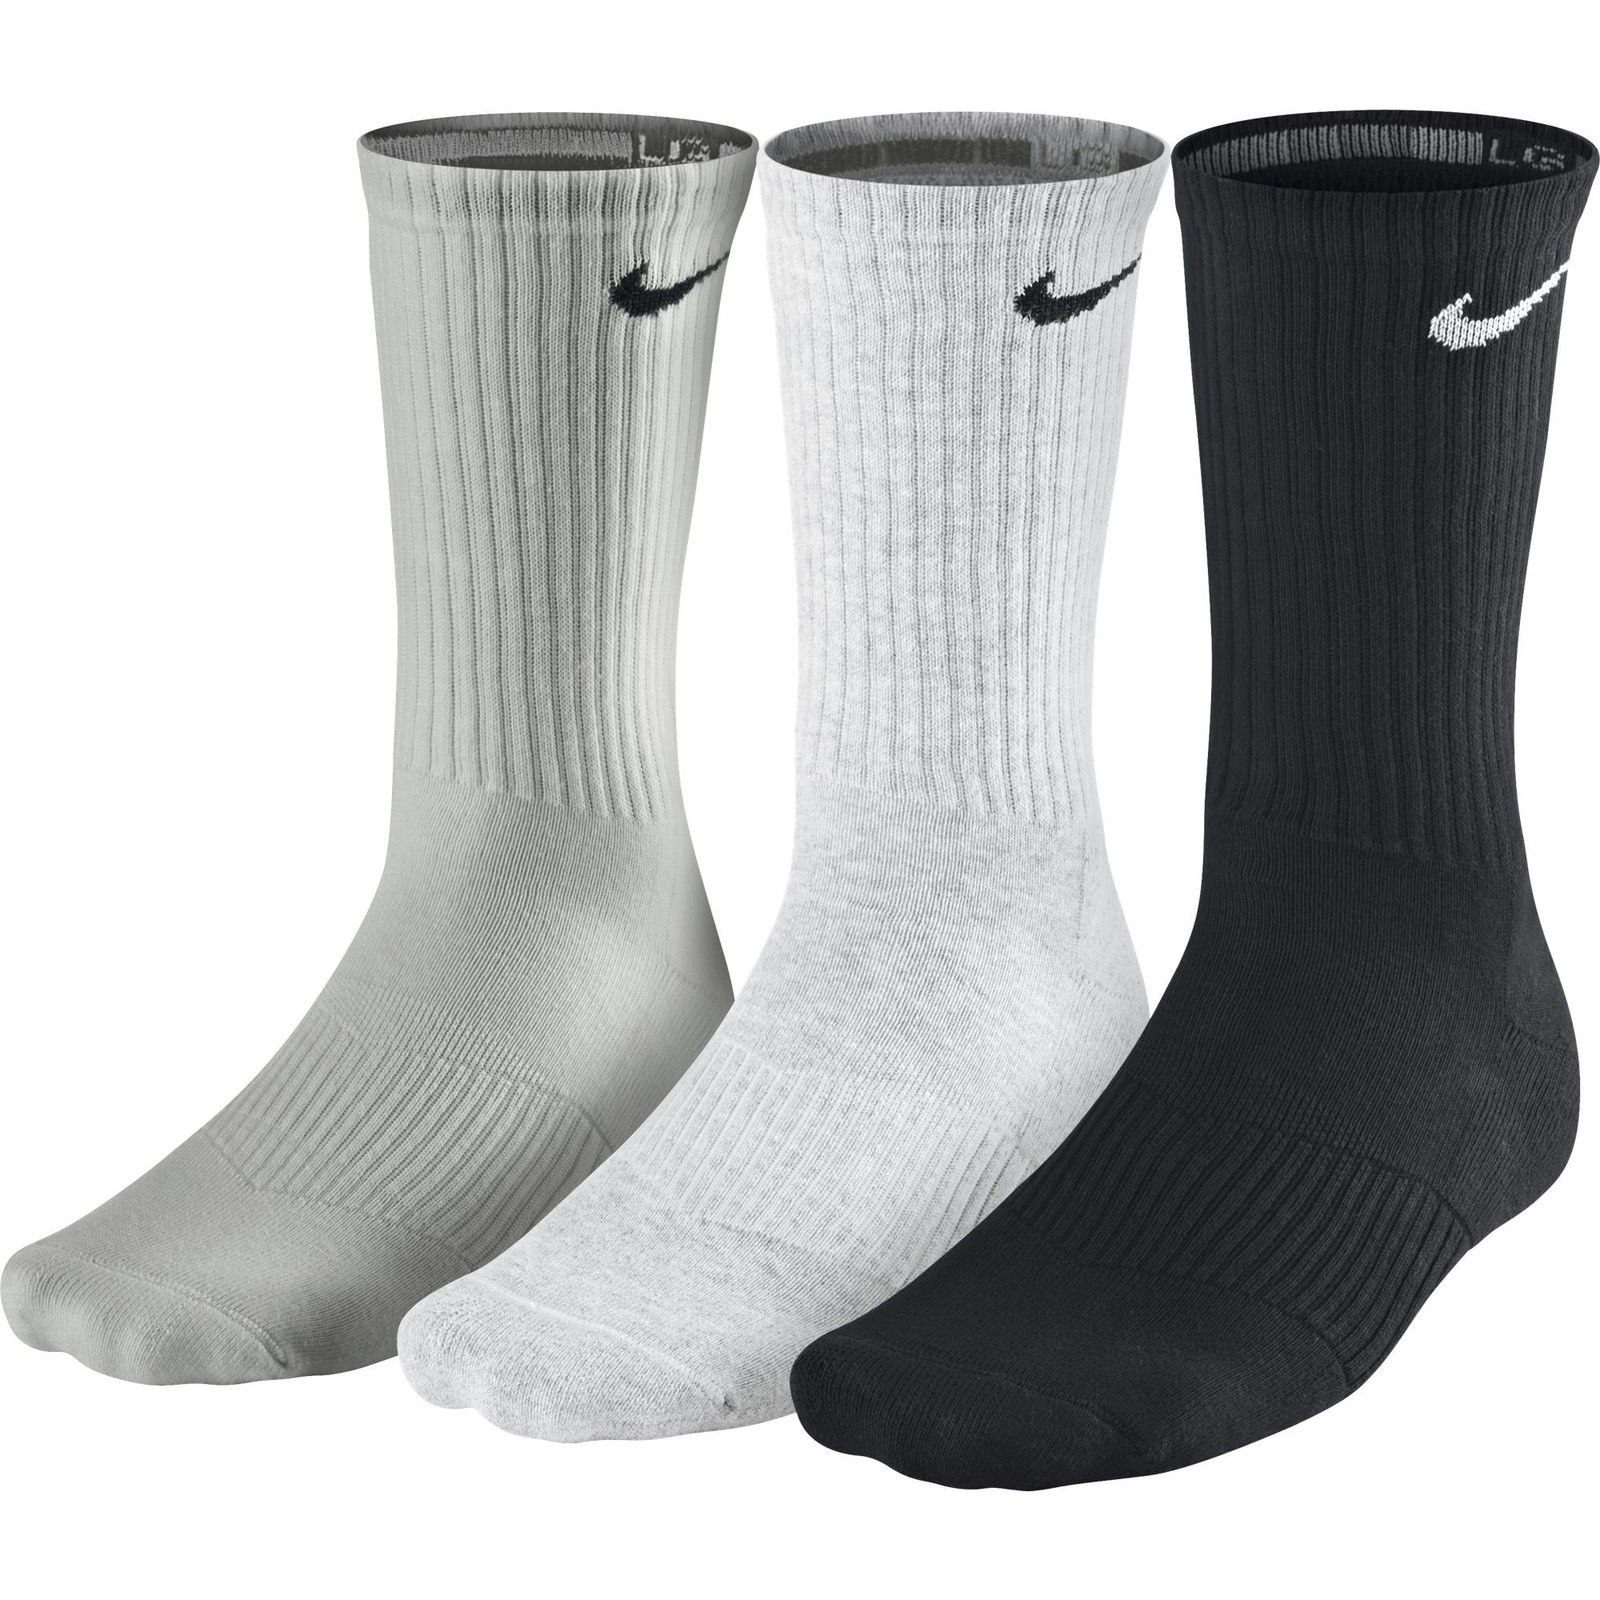 nike performance cotton socks